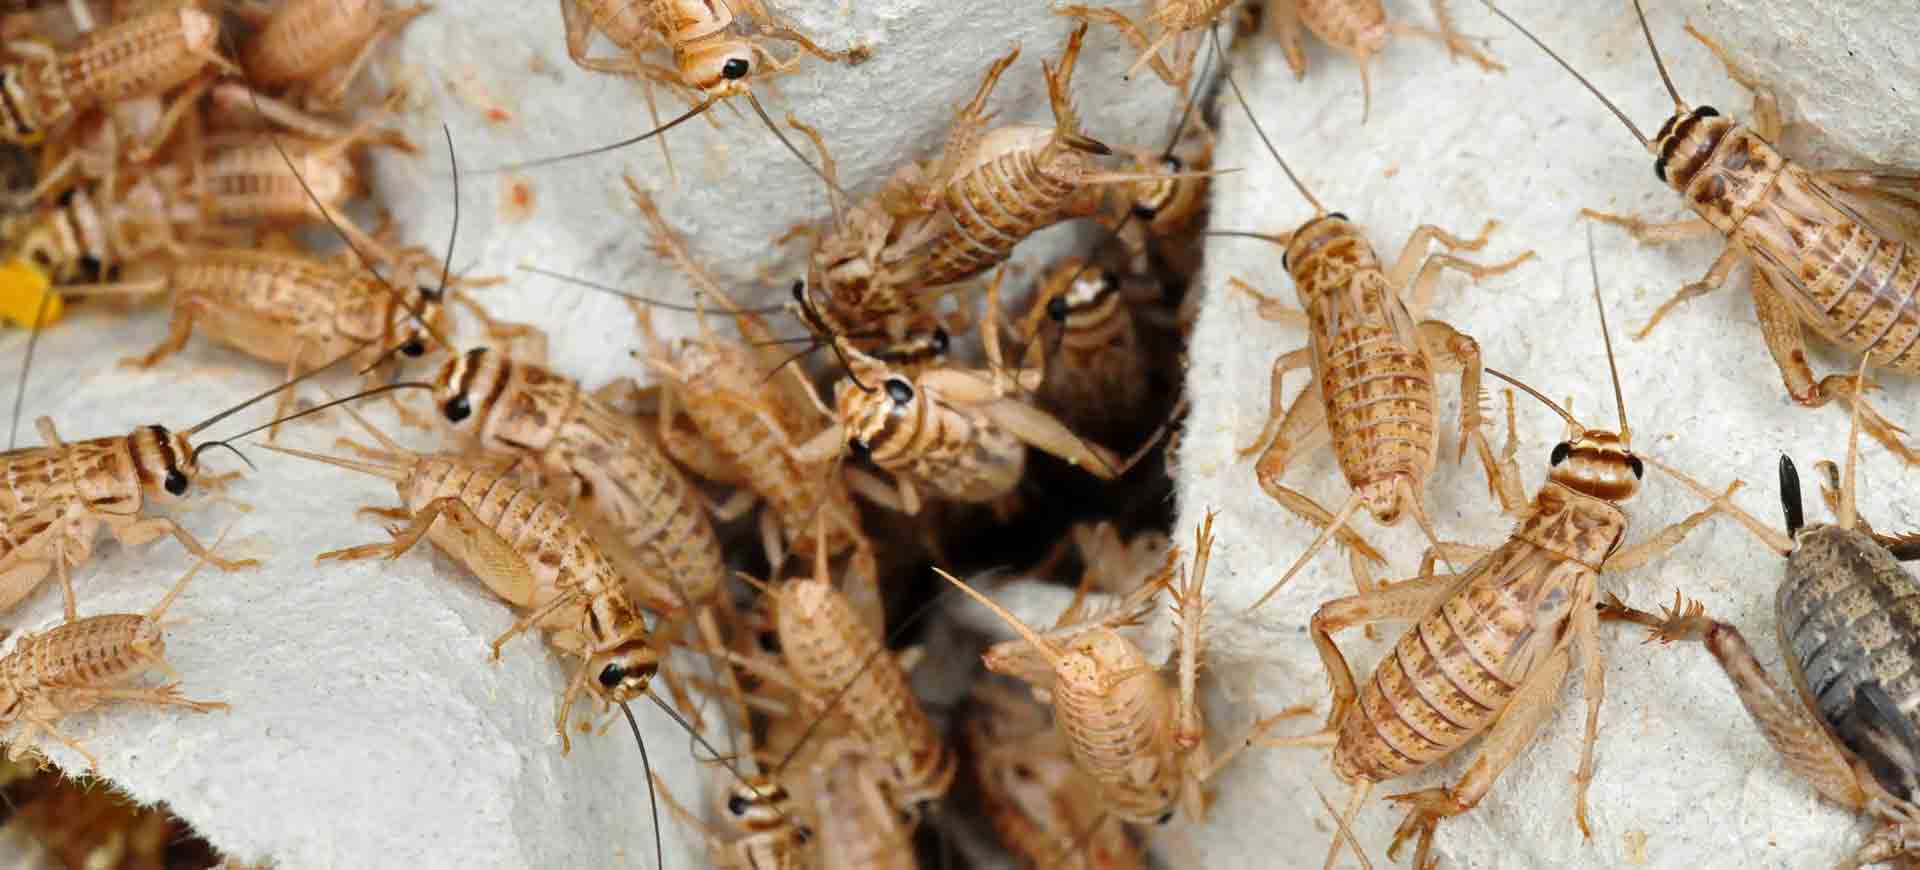 cricket pest control santee